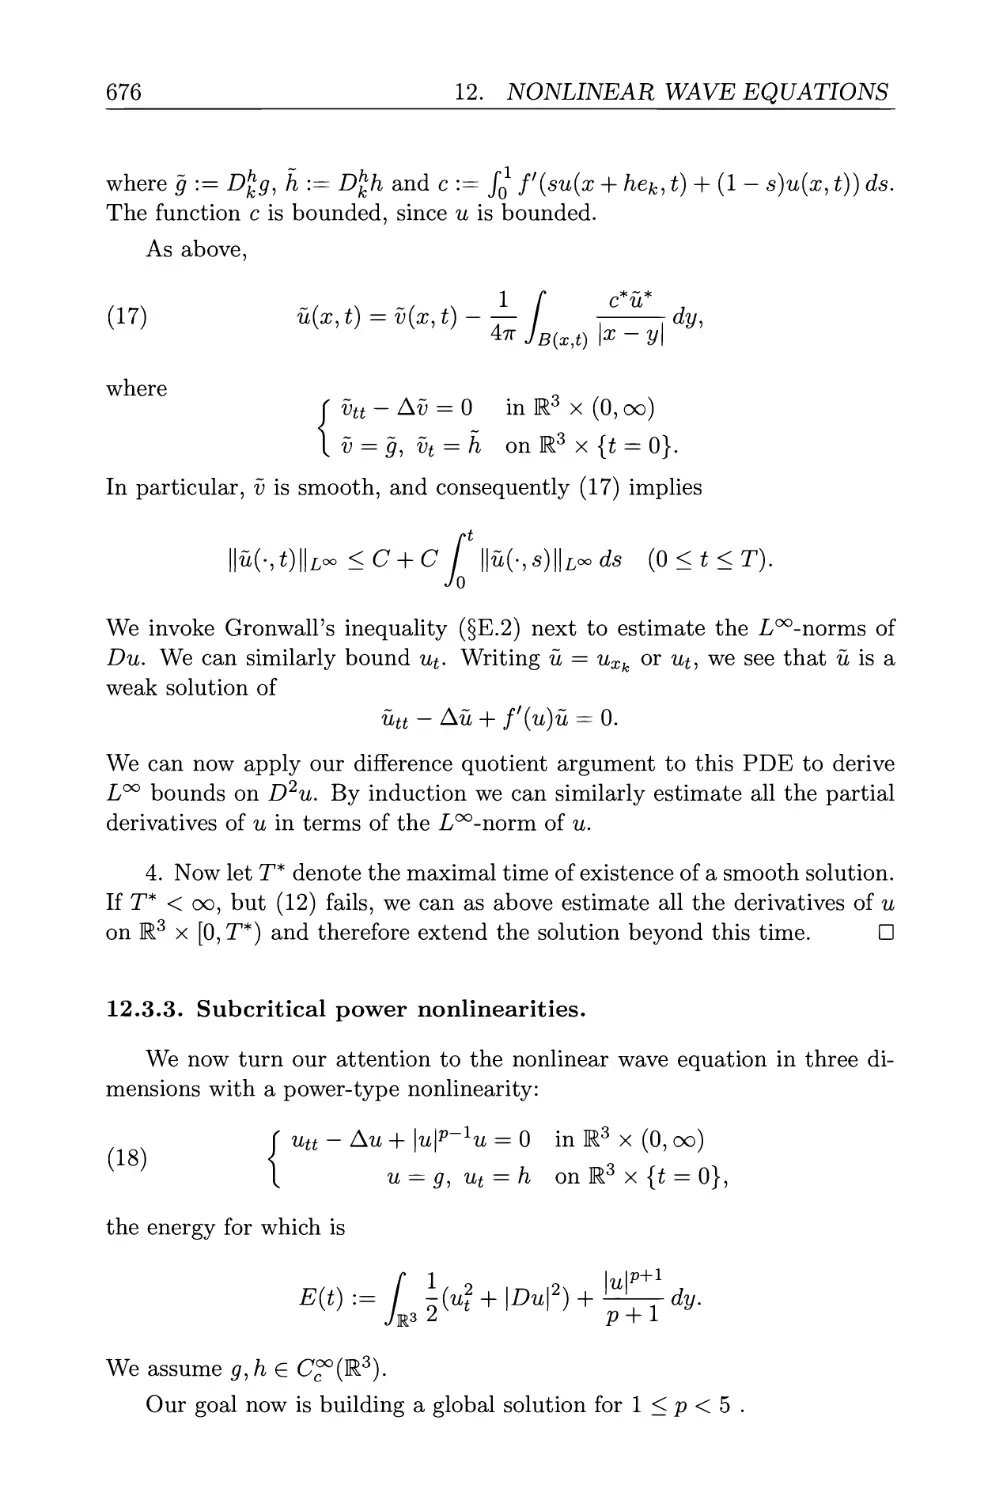 12.3.3. Subcritical power nonlinearities